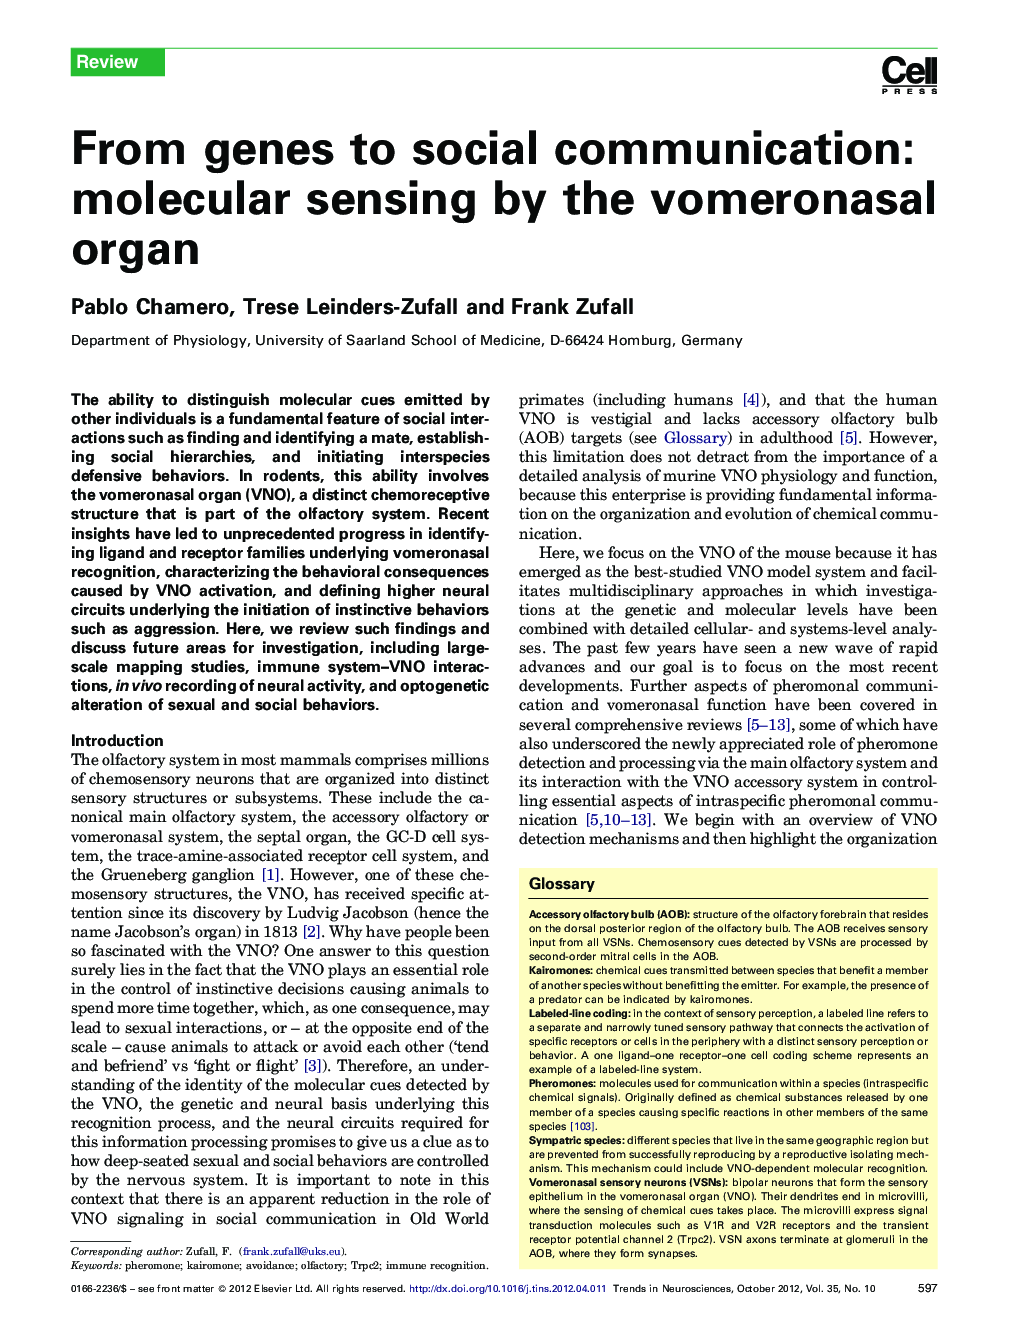 From genes to social communication: molecular sensing by the vomeronasal organ